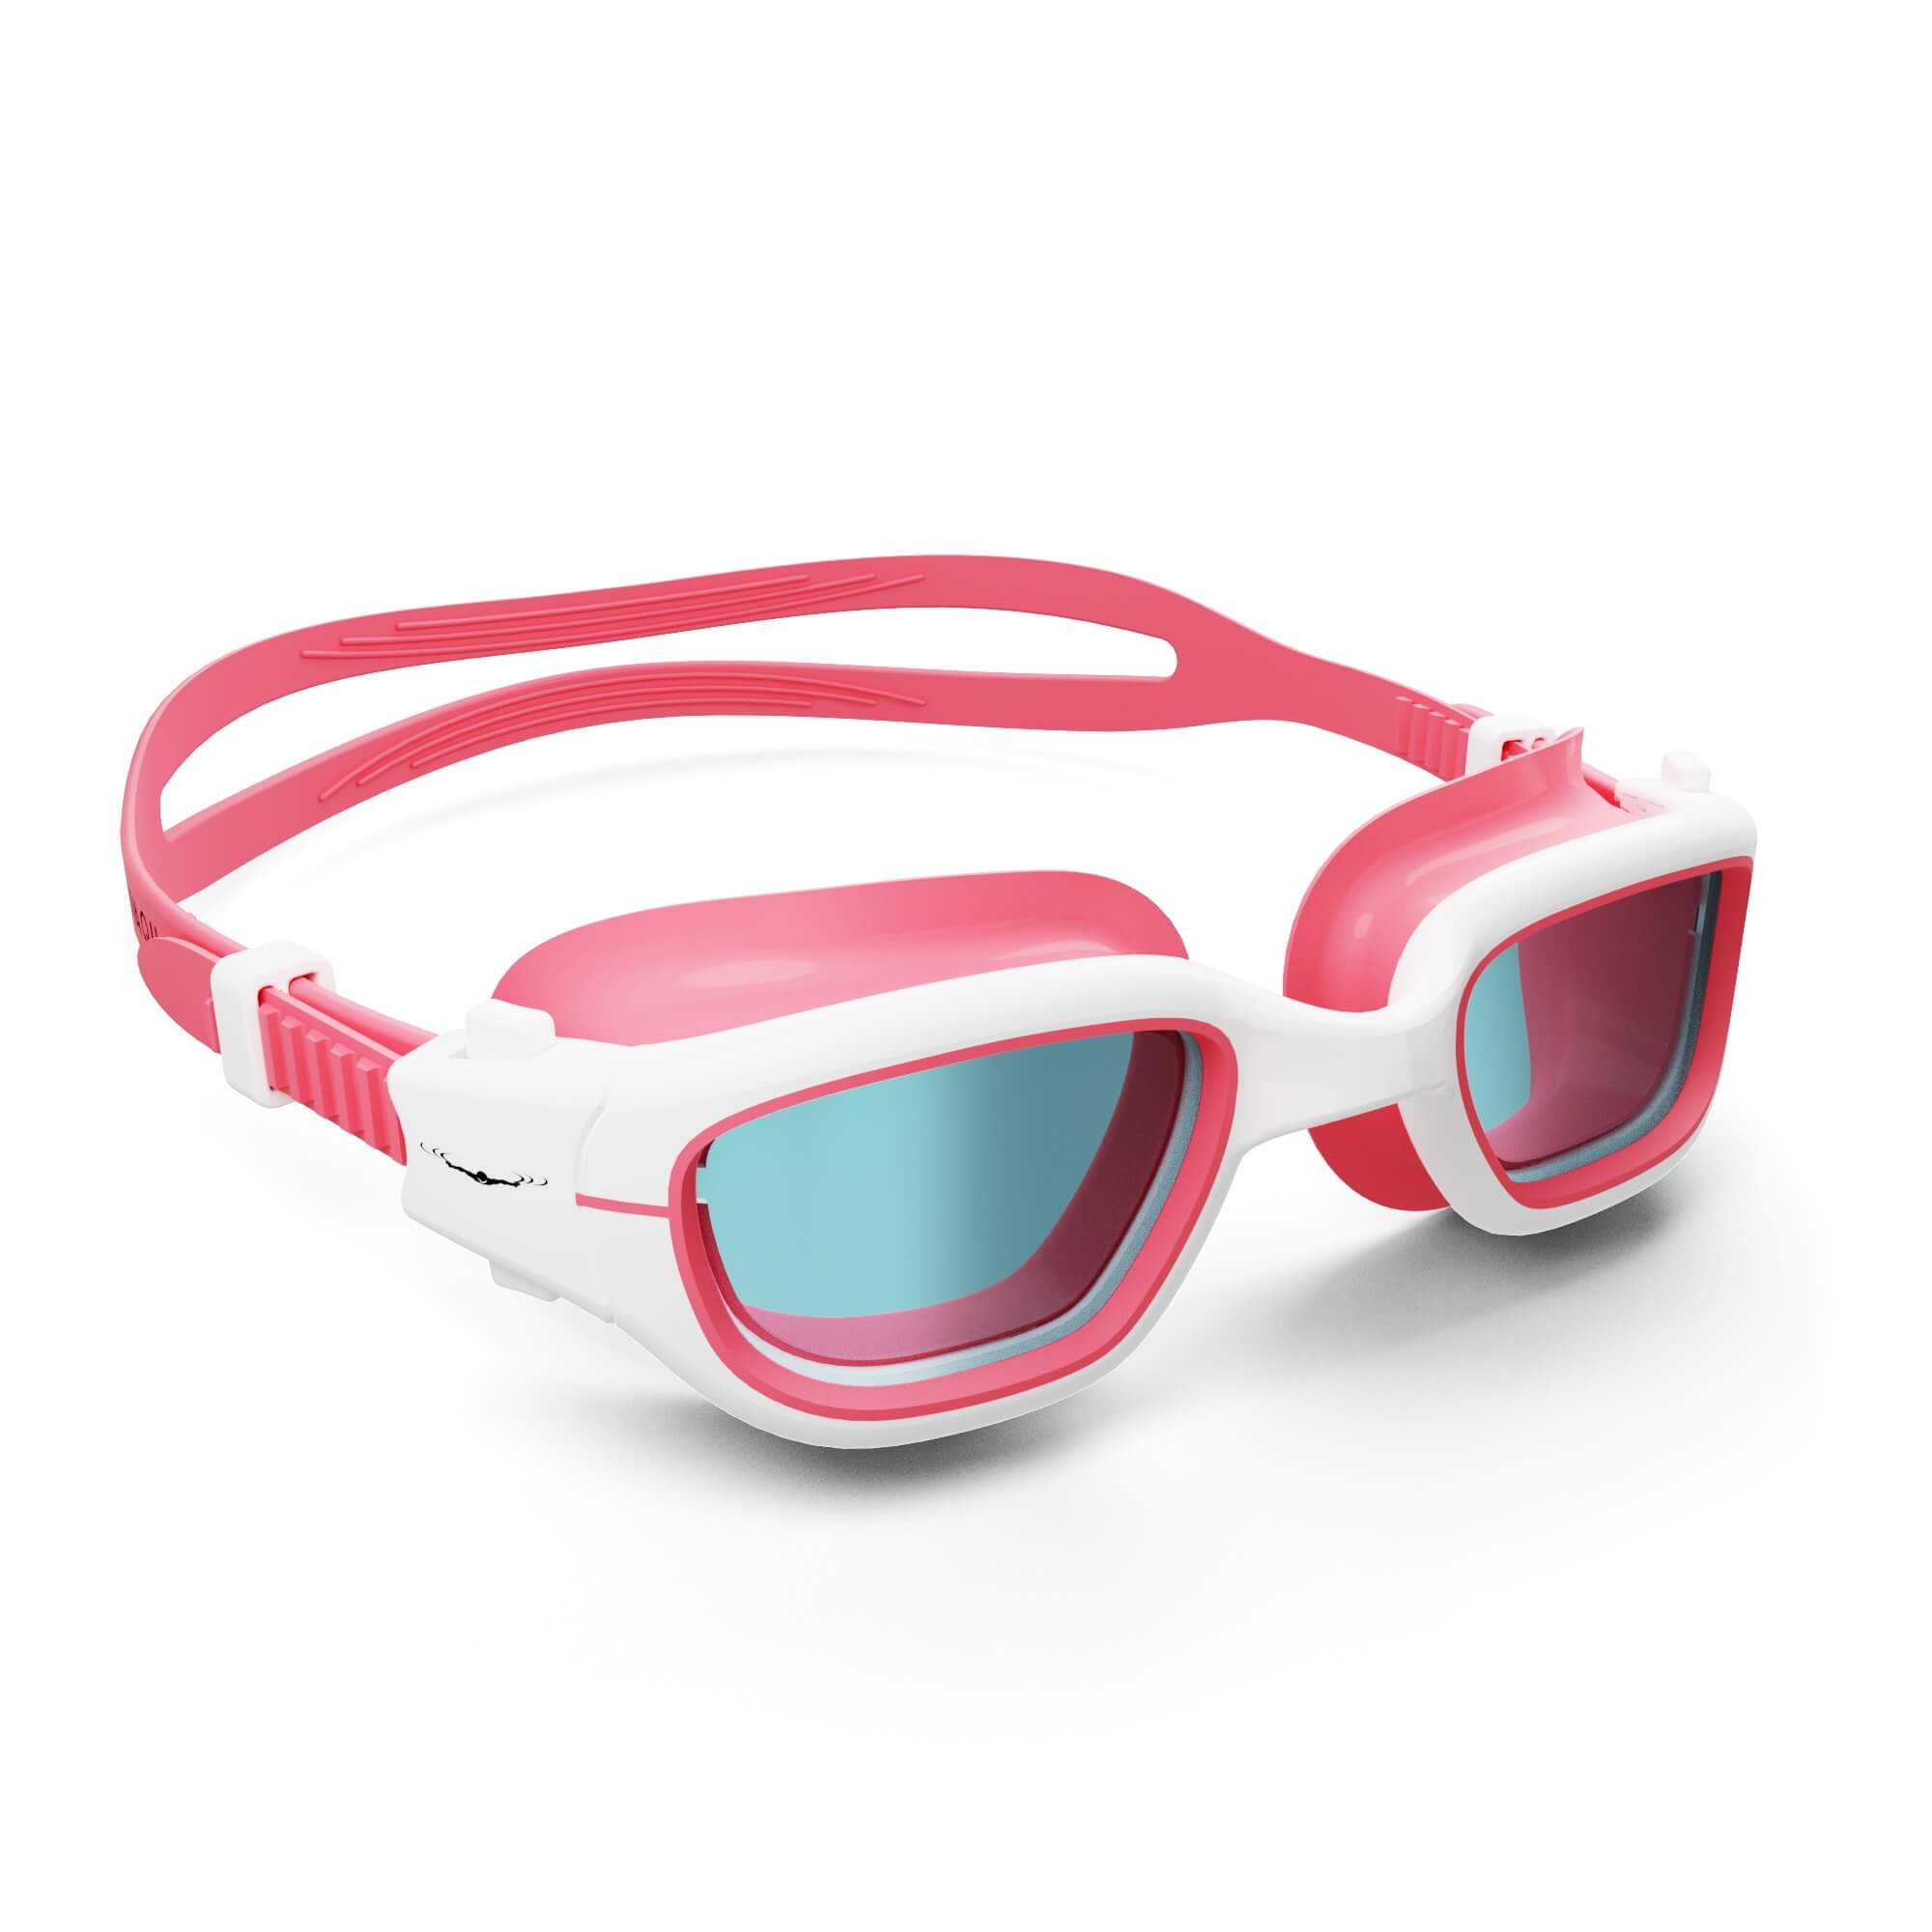 AQTIVAQUA DX-MINI: The Ultimate Kids Swim Goggles for Safe 